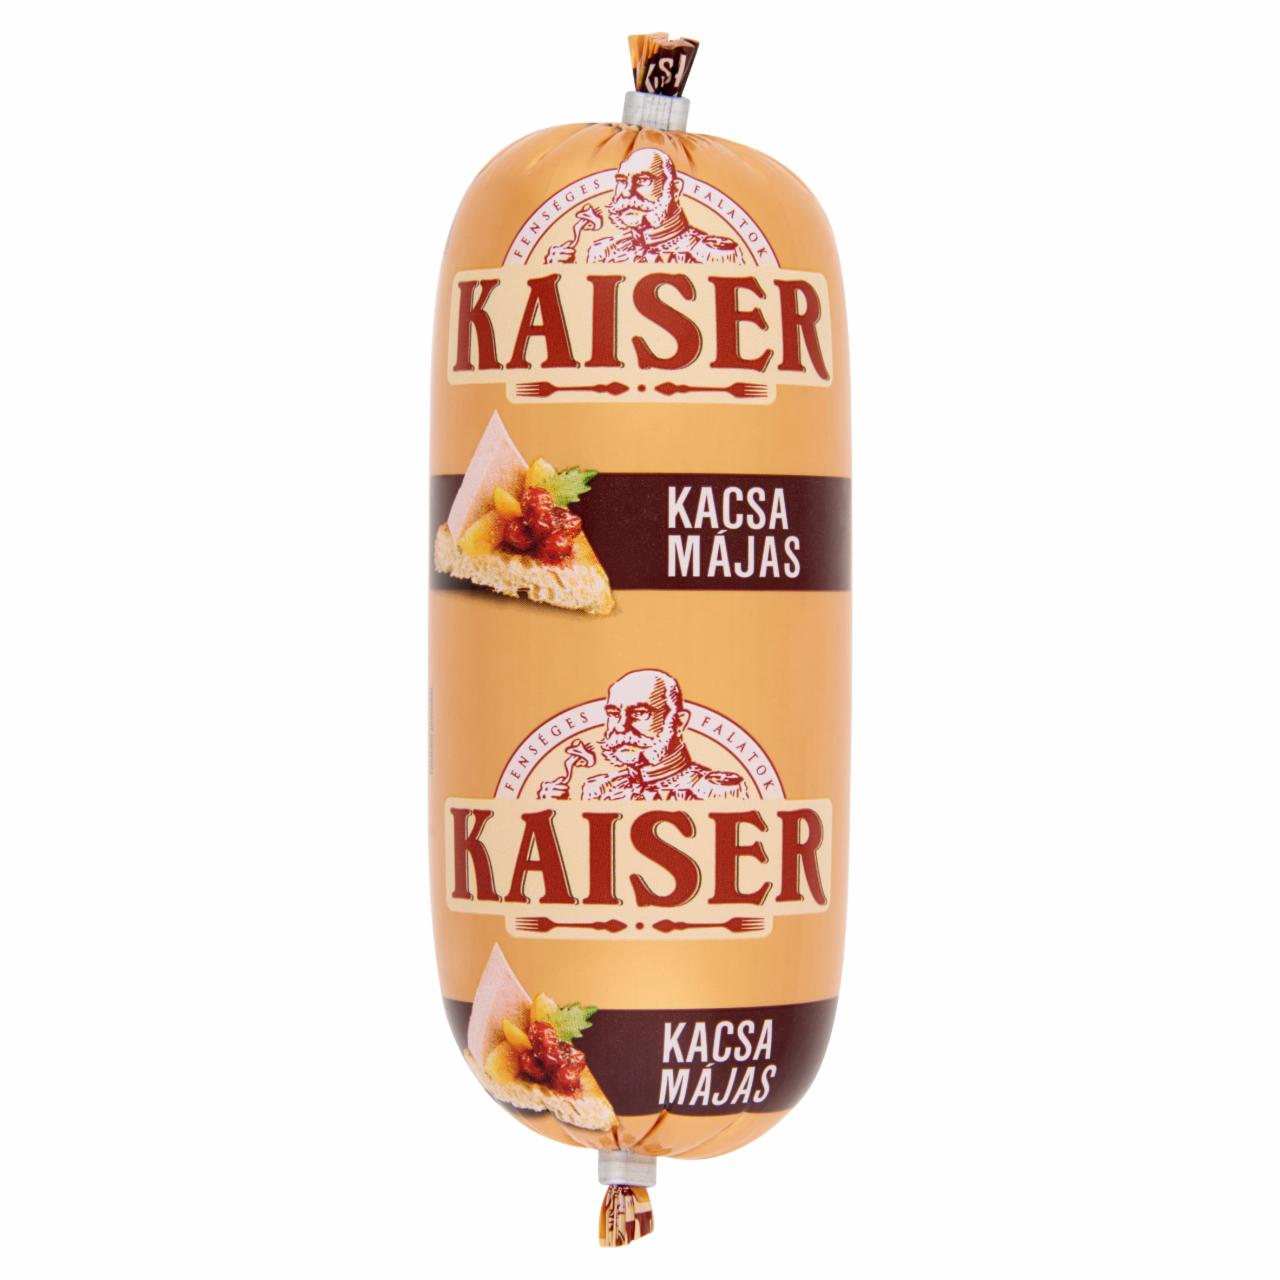 Képek - Kaiser kacsa májas 300 g